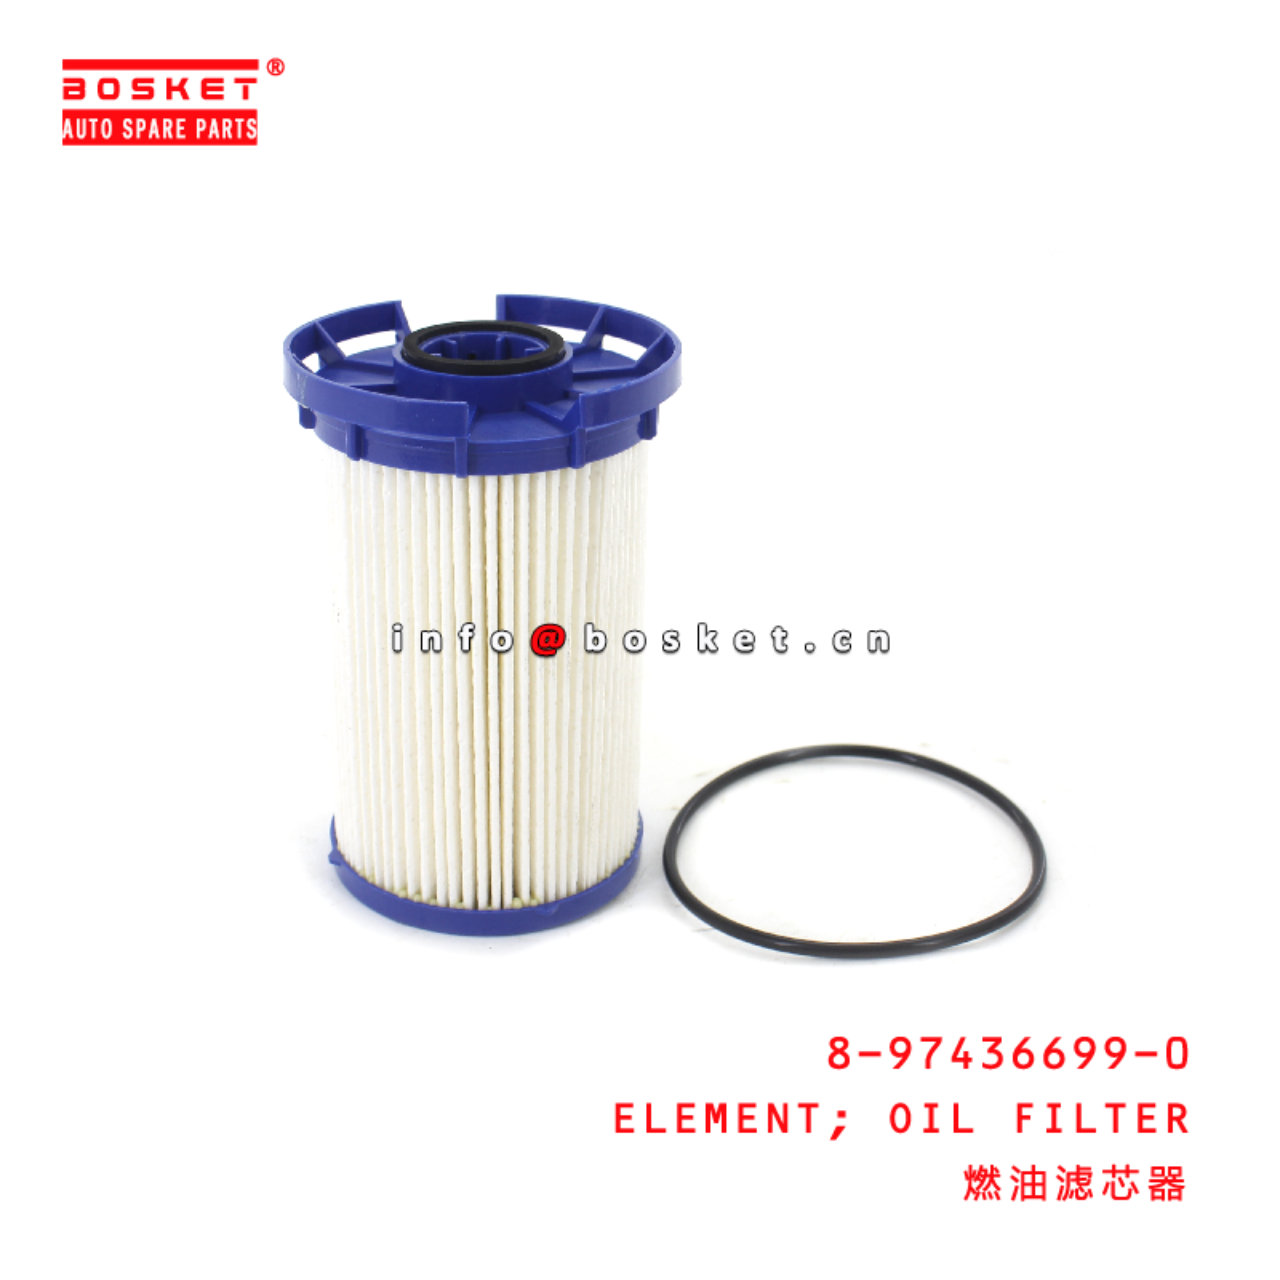 8-97436699-0 Oil Filter Element suitable for ISUZU  8974366990